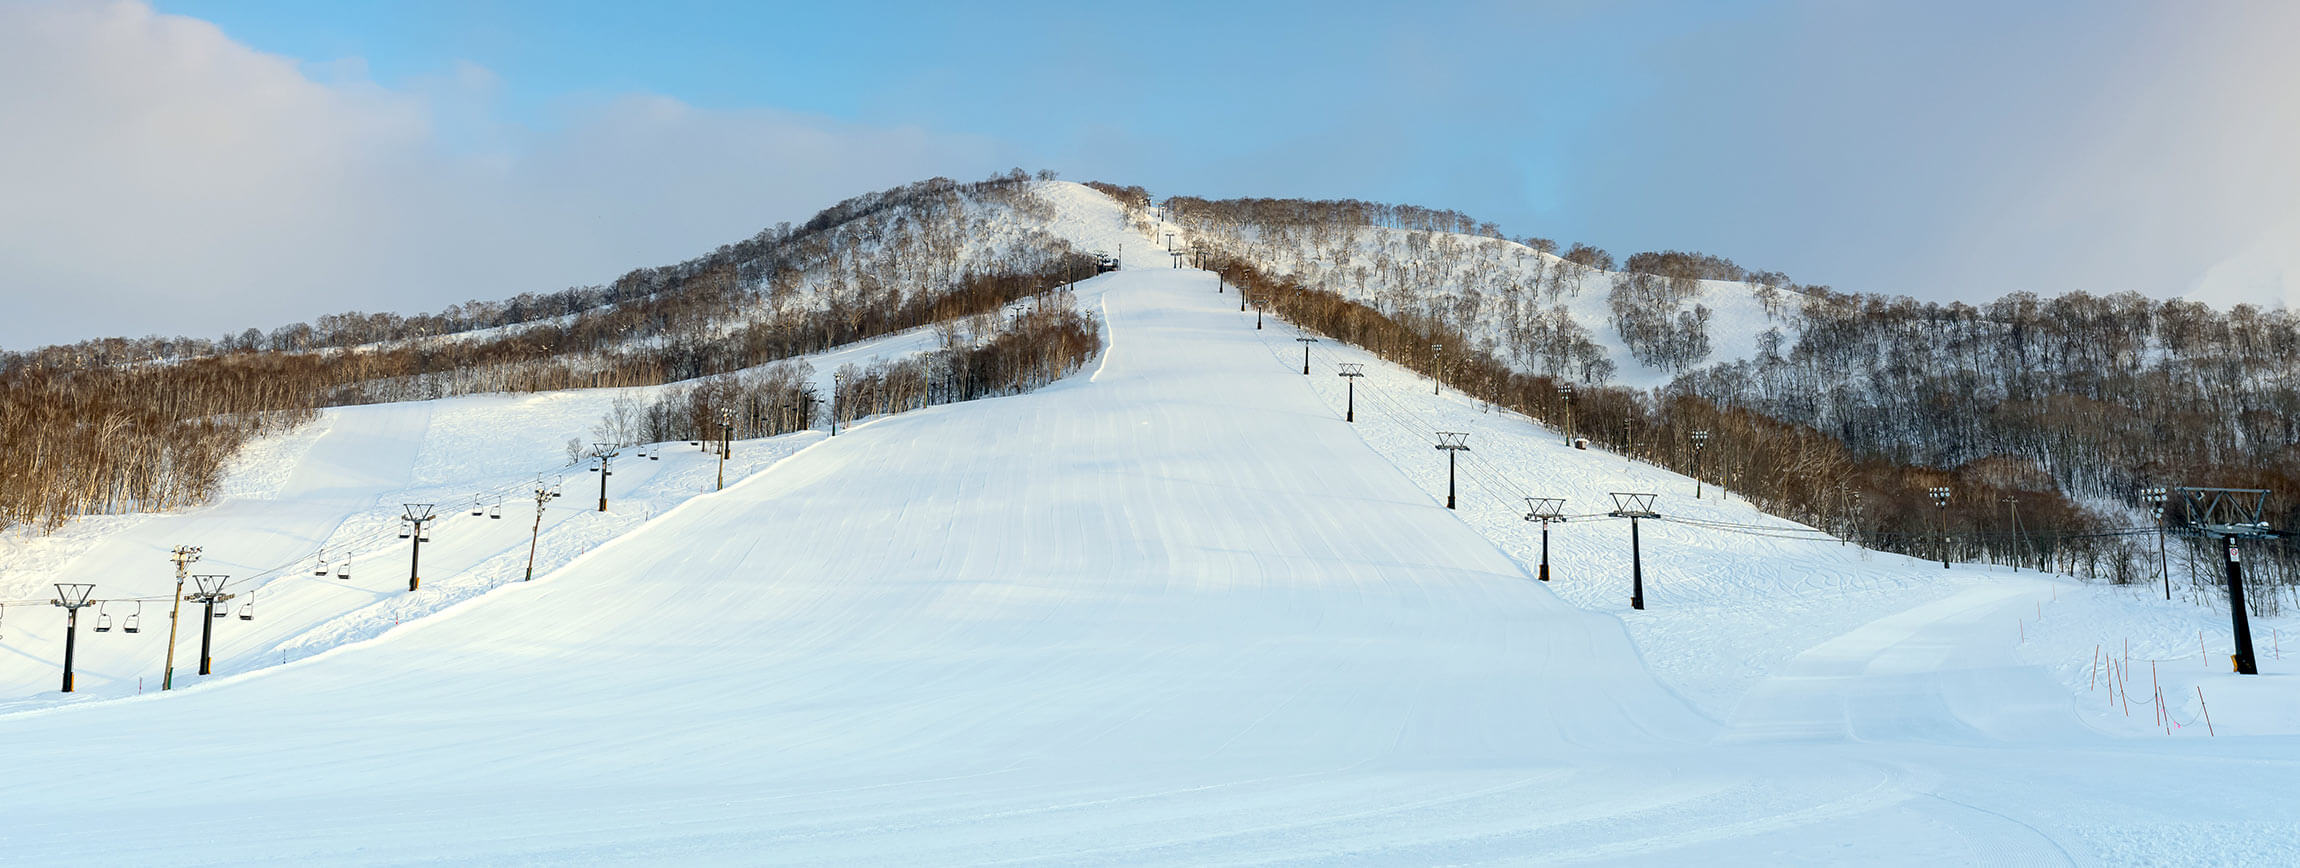 Niseko Moiwa Ski Resort, Japan.